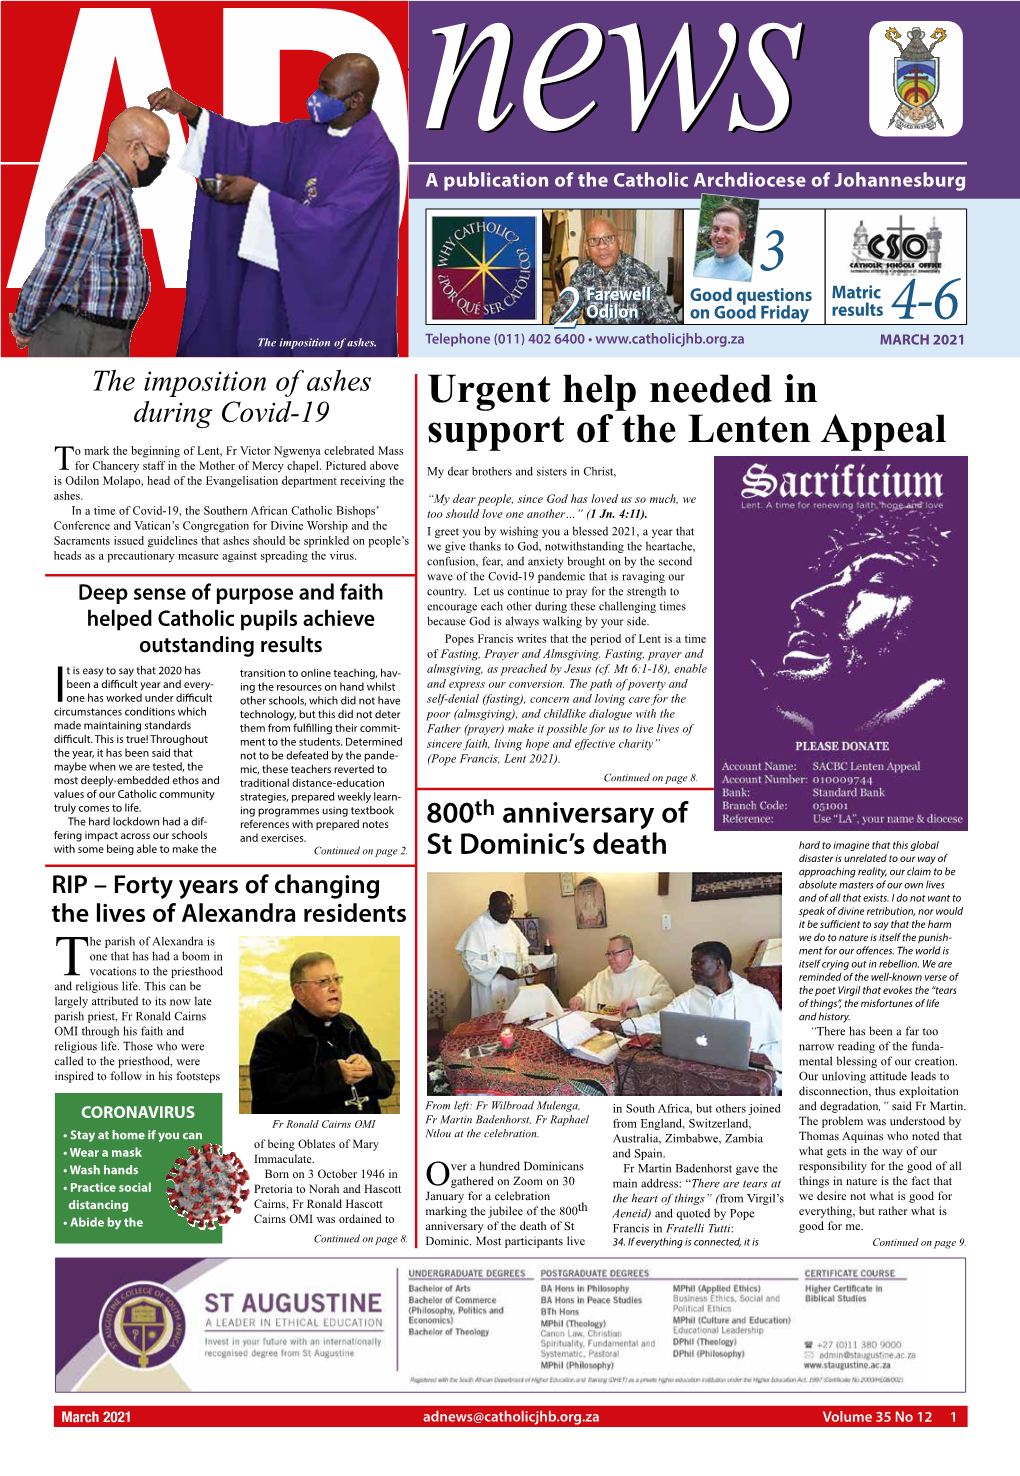 Urgent Help Needed in Support of the Lenten Appeal